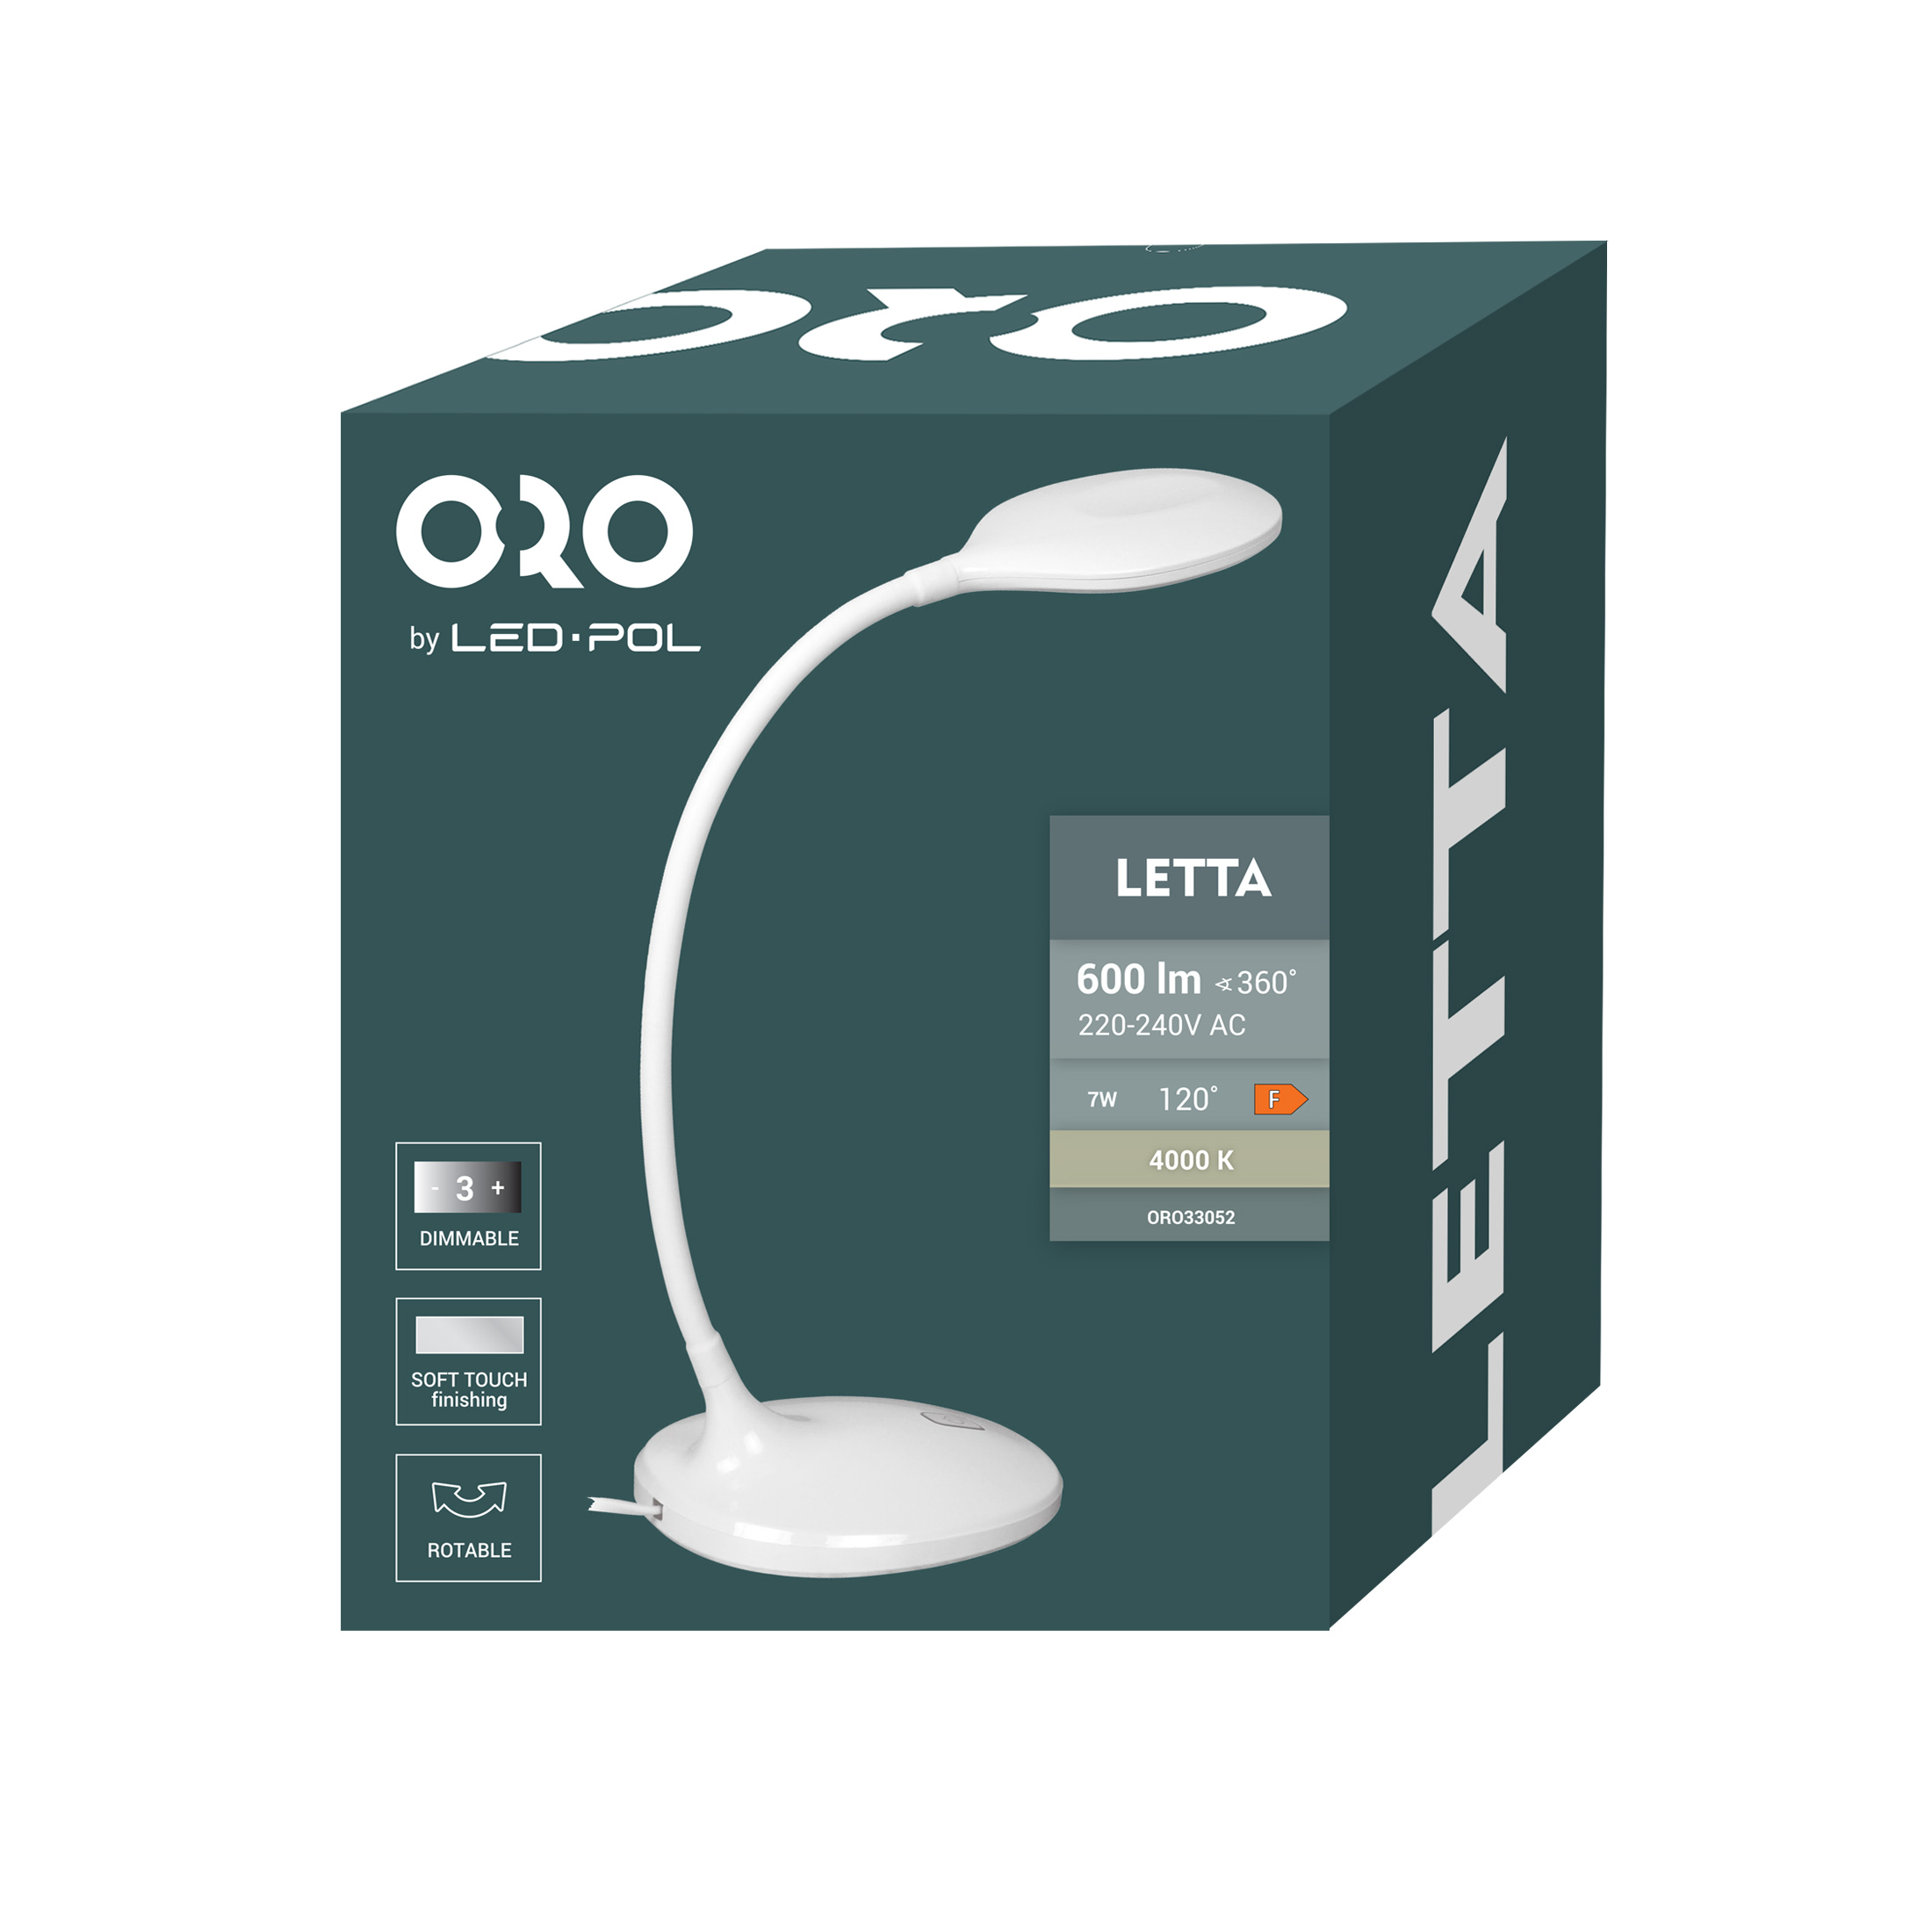 LED lampièka ORO LETTA LED W 7W, 4000K, 600lm, DIMM, IP20, bílá, ORO33052 - zvìtšit obrázek